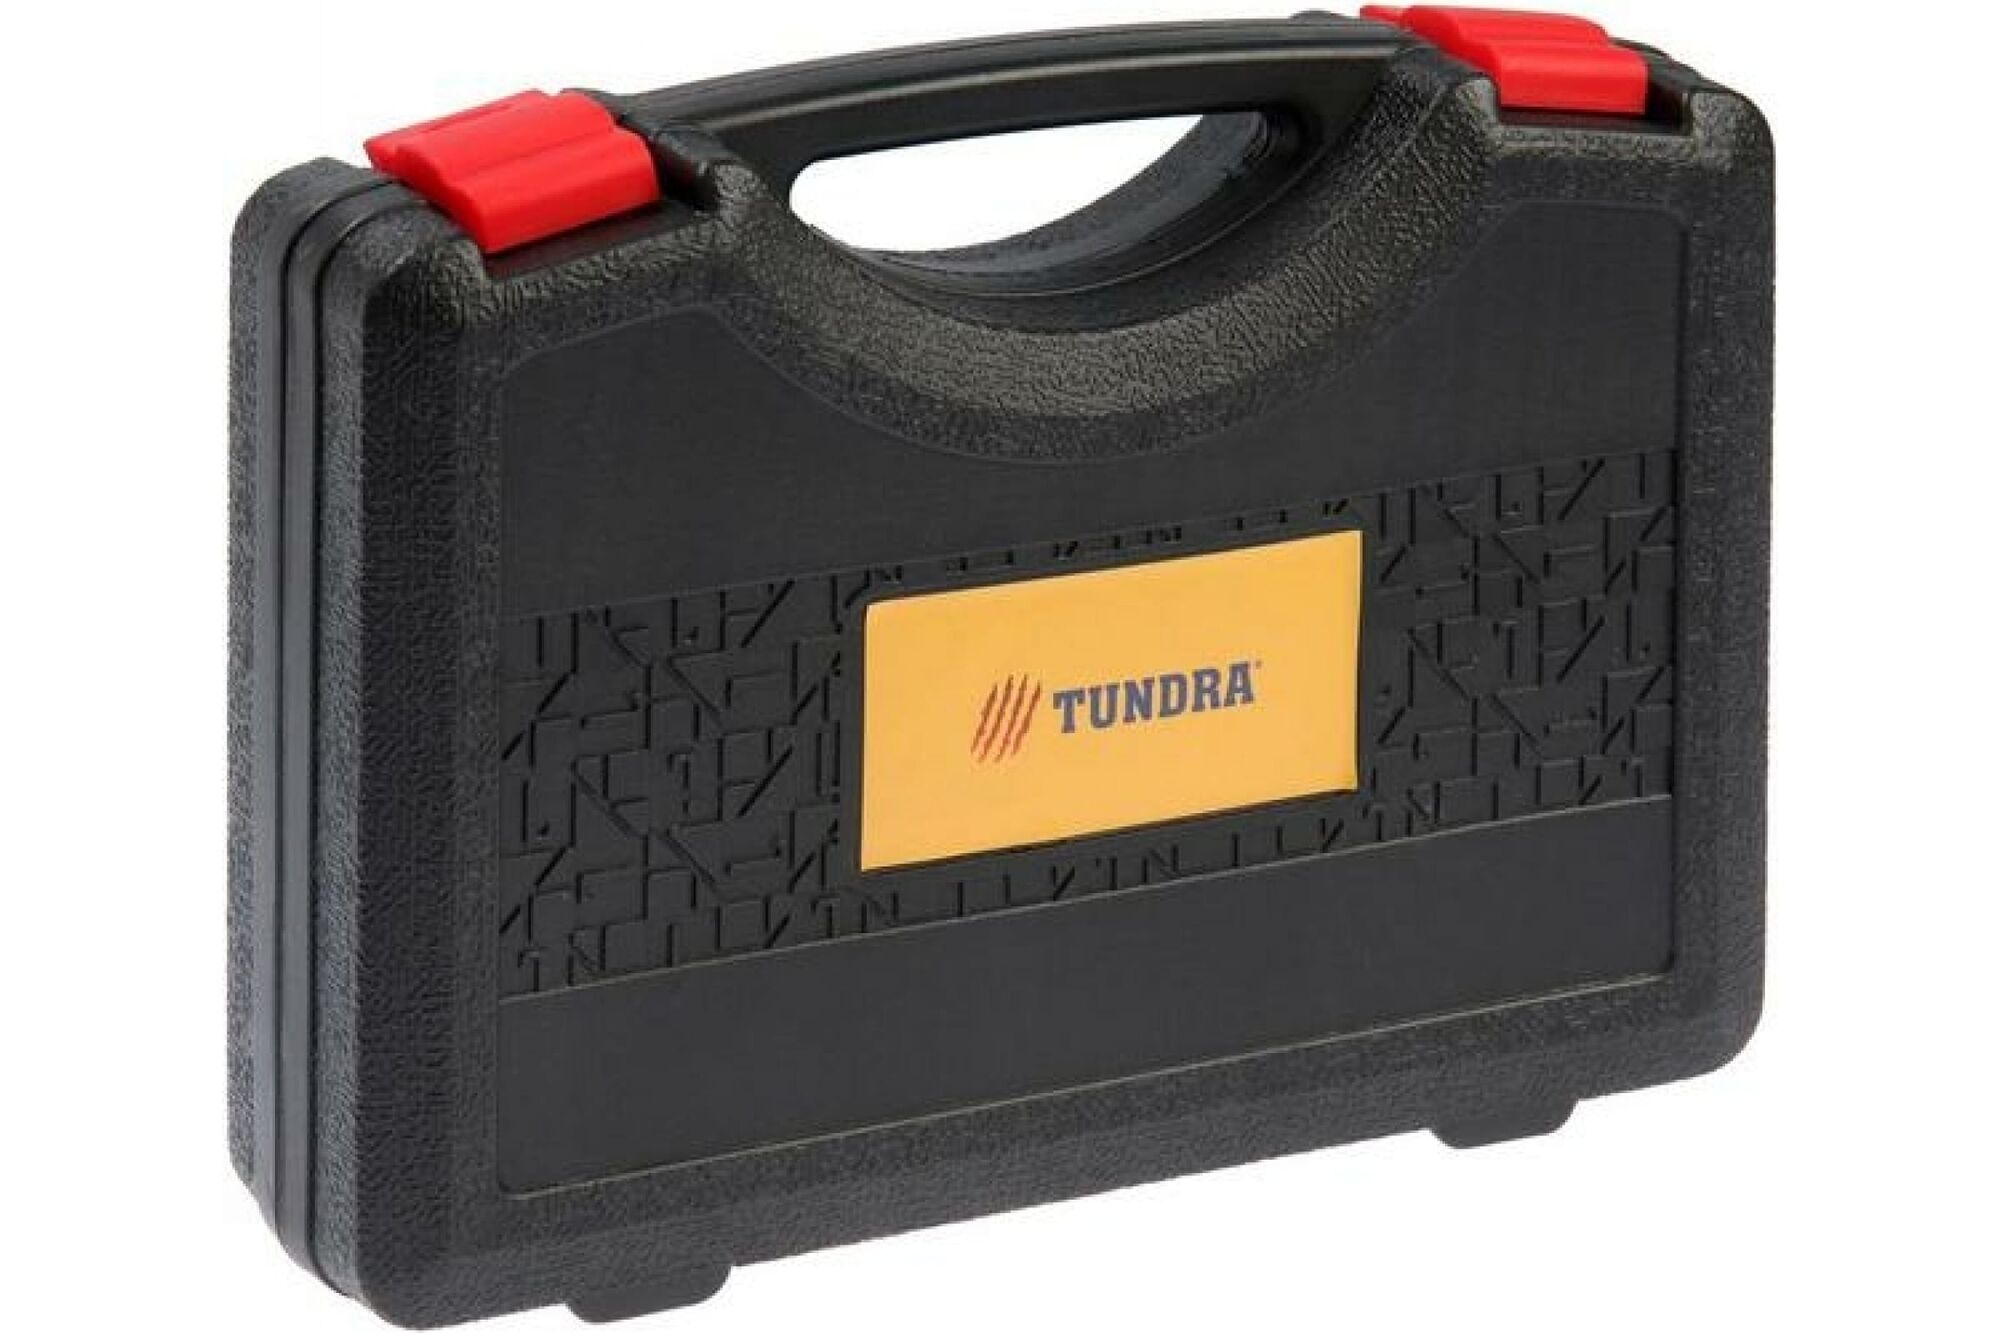 Набор инструментов TUNDRA в кейсе, подарочная упаковка, 7 предметов 7143981 3